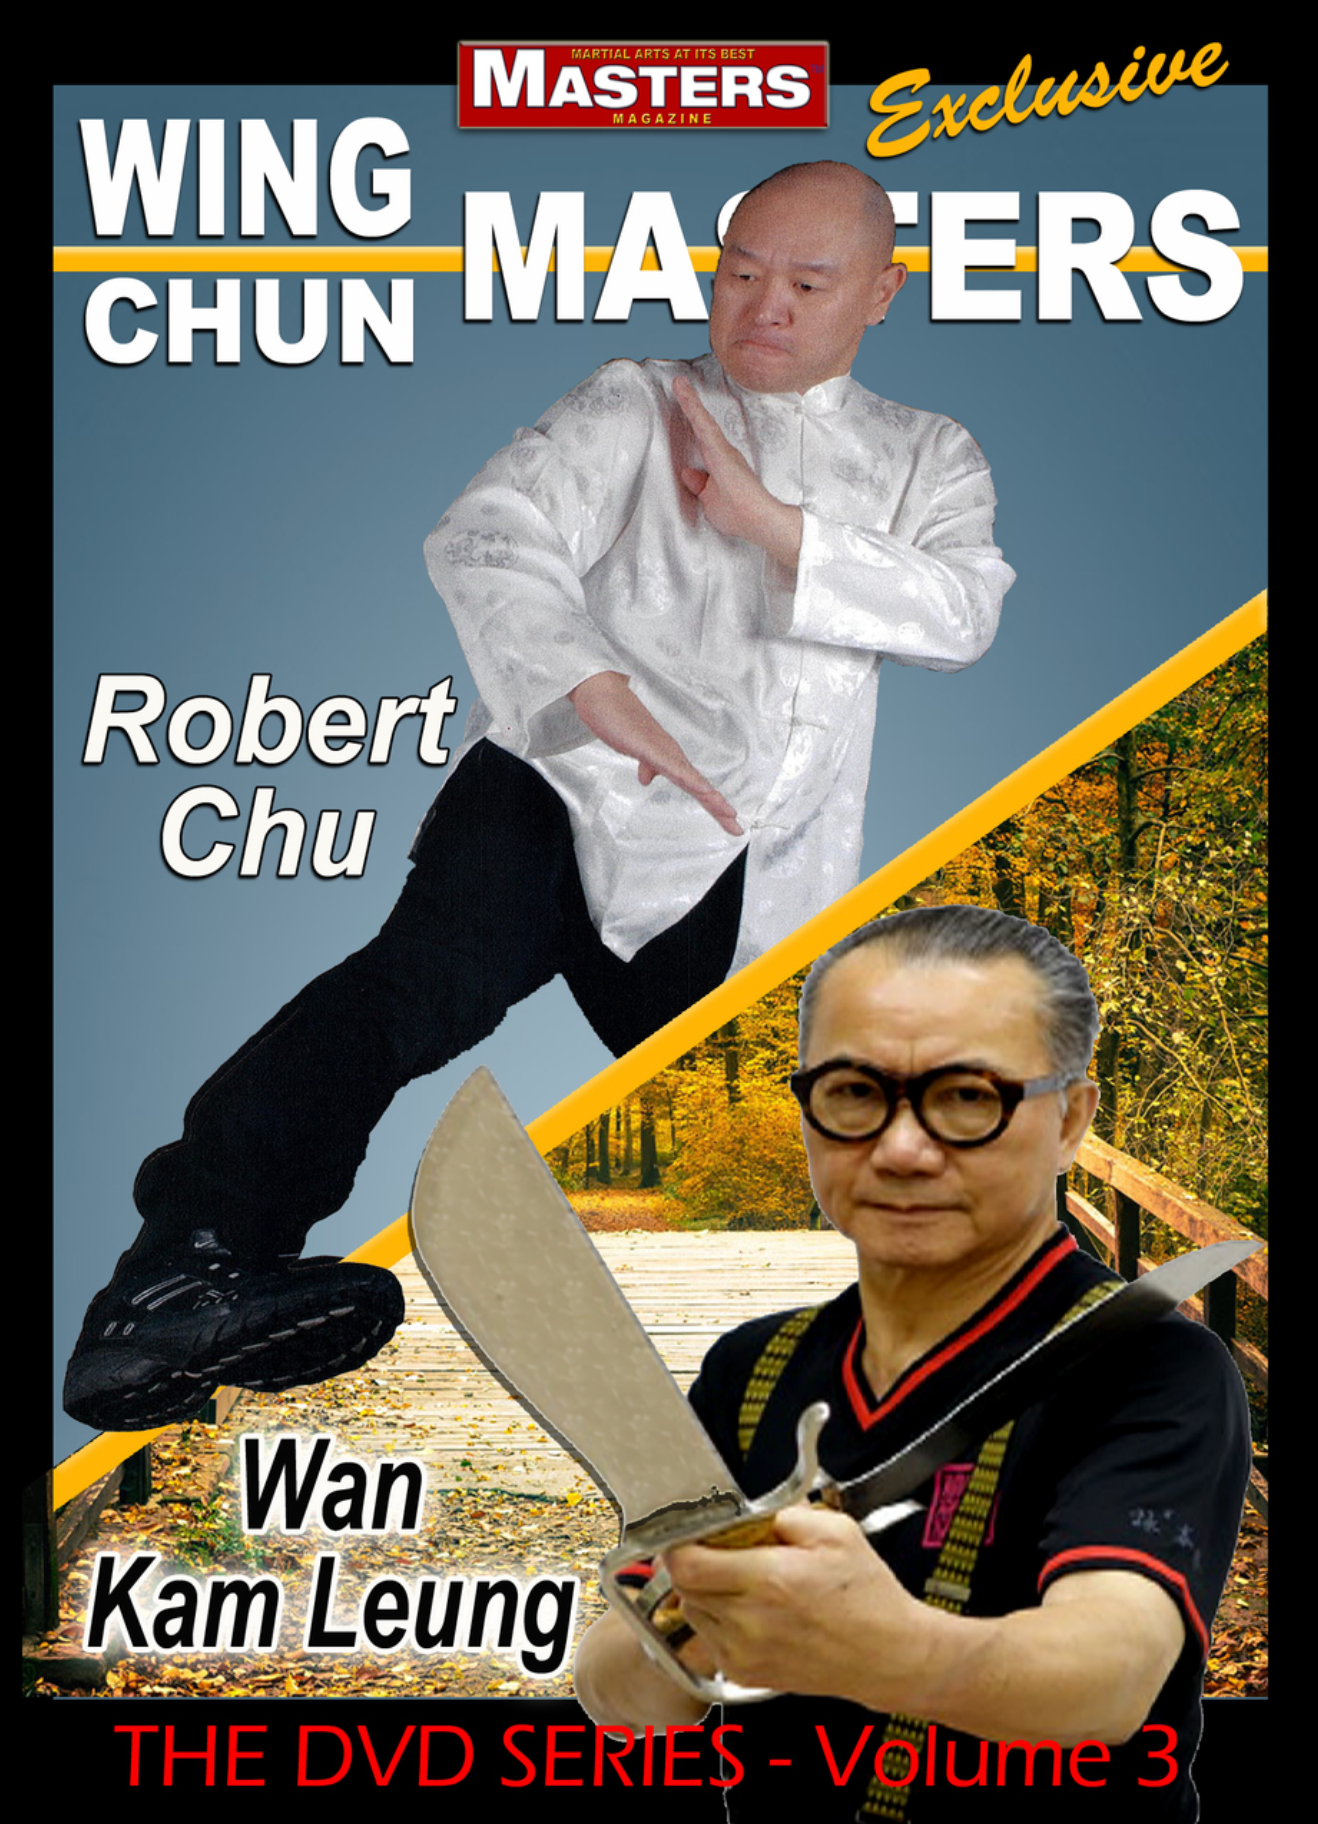 Wing Chun Masters DVD 3: Robert Chu & Wan Kam Leung - Budovideos Inc